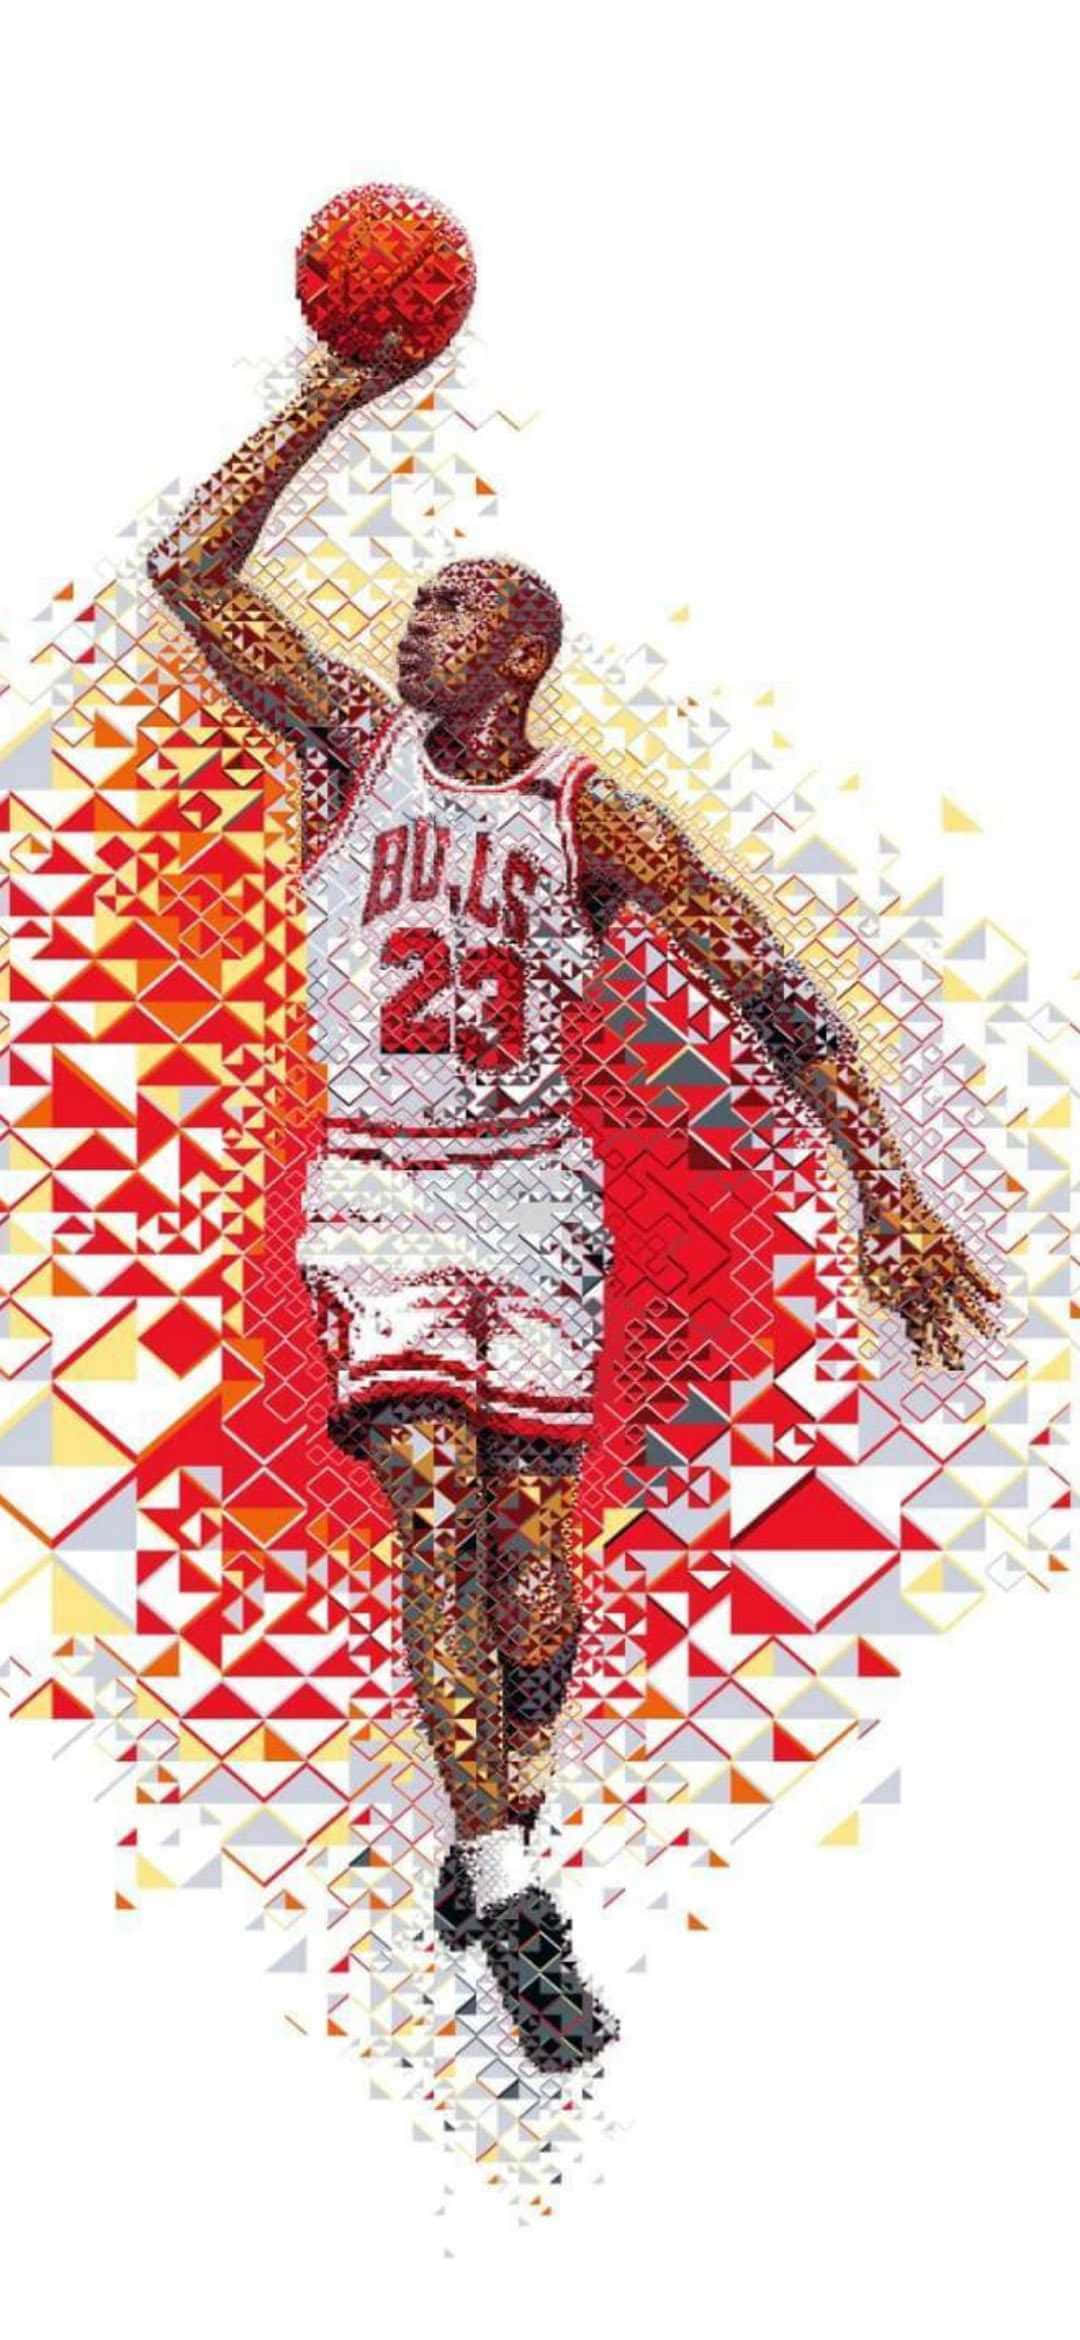 Michael Jordan, The Legendary Basketball Player